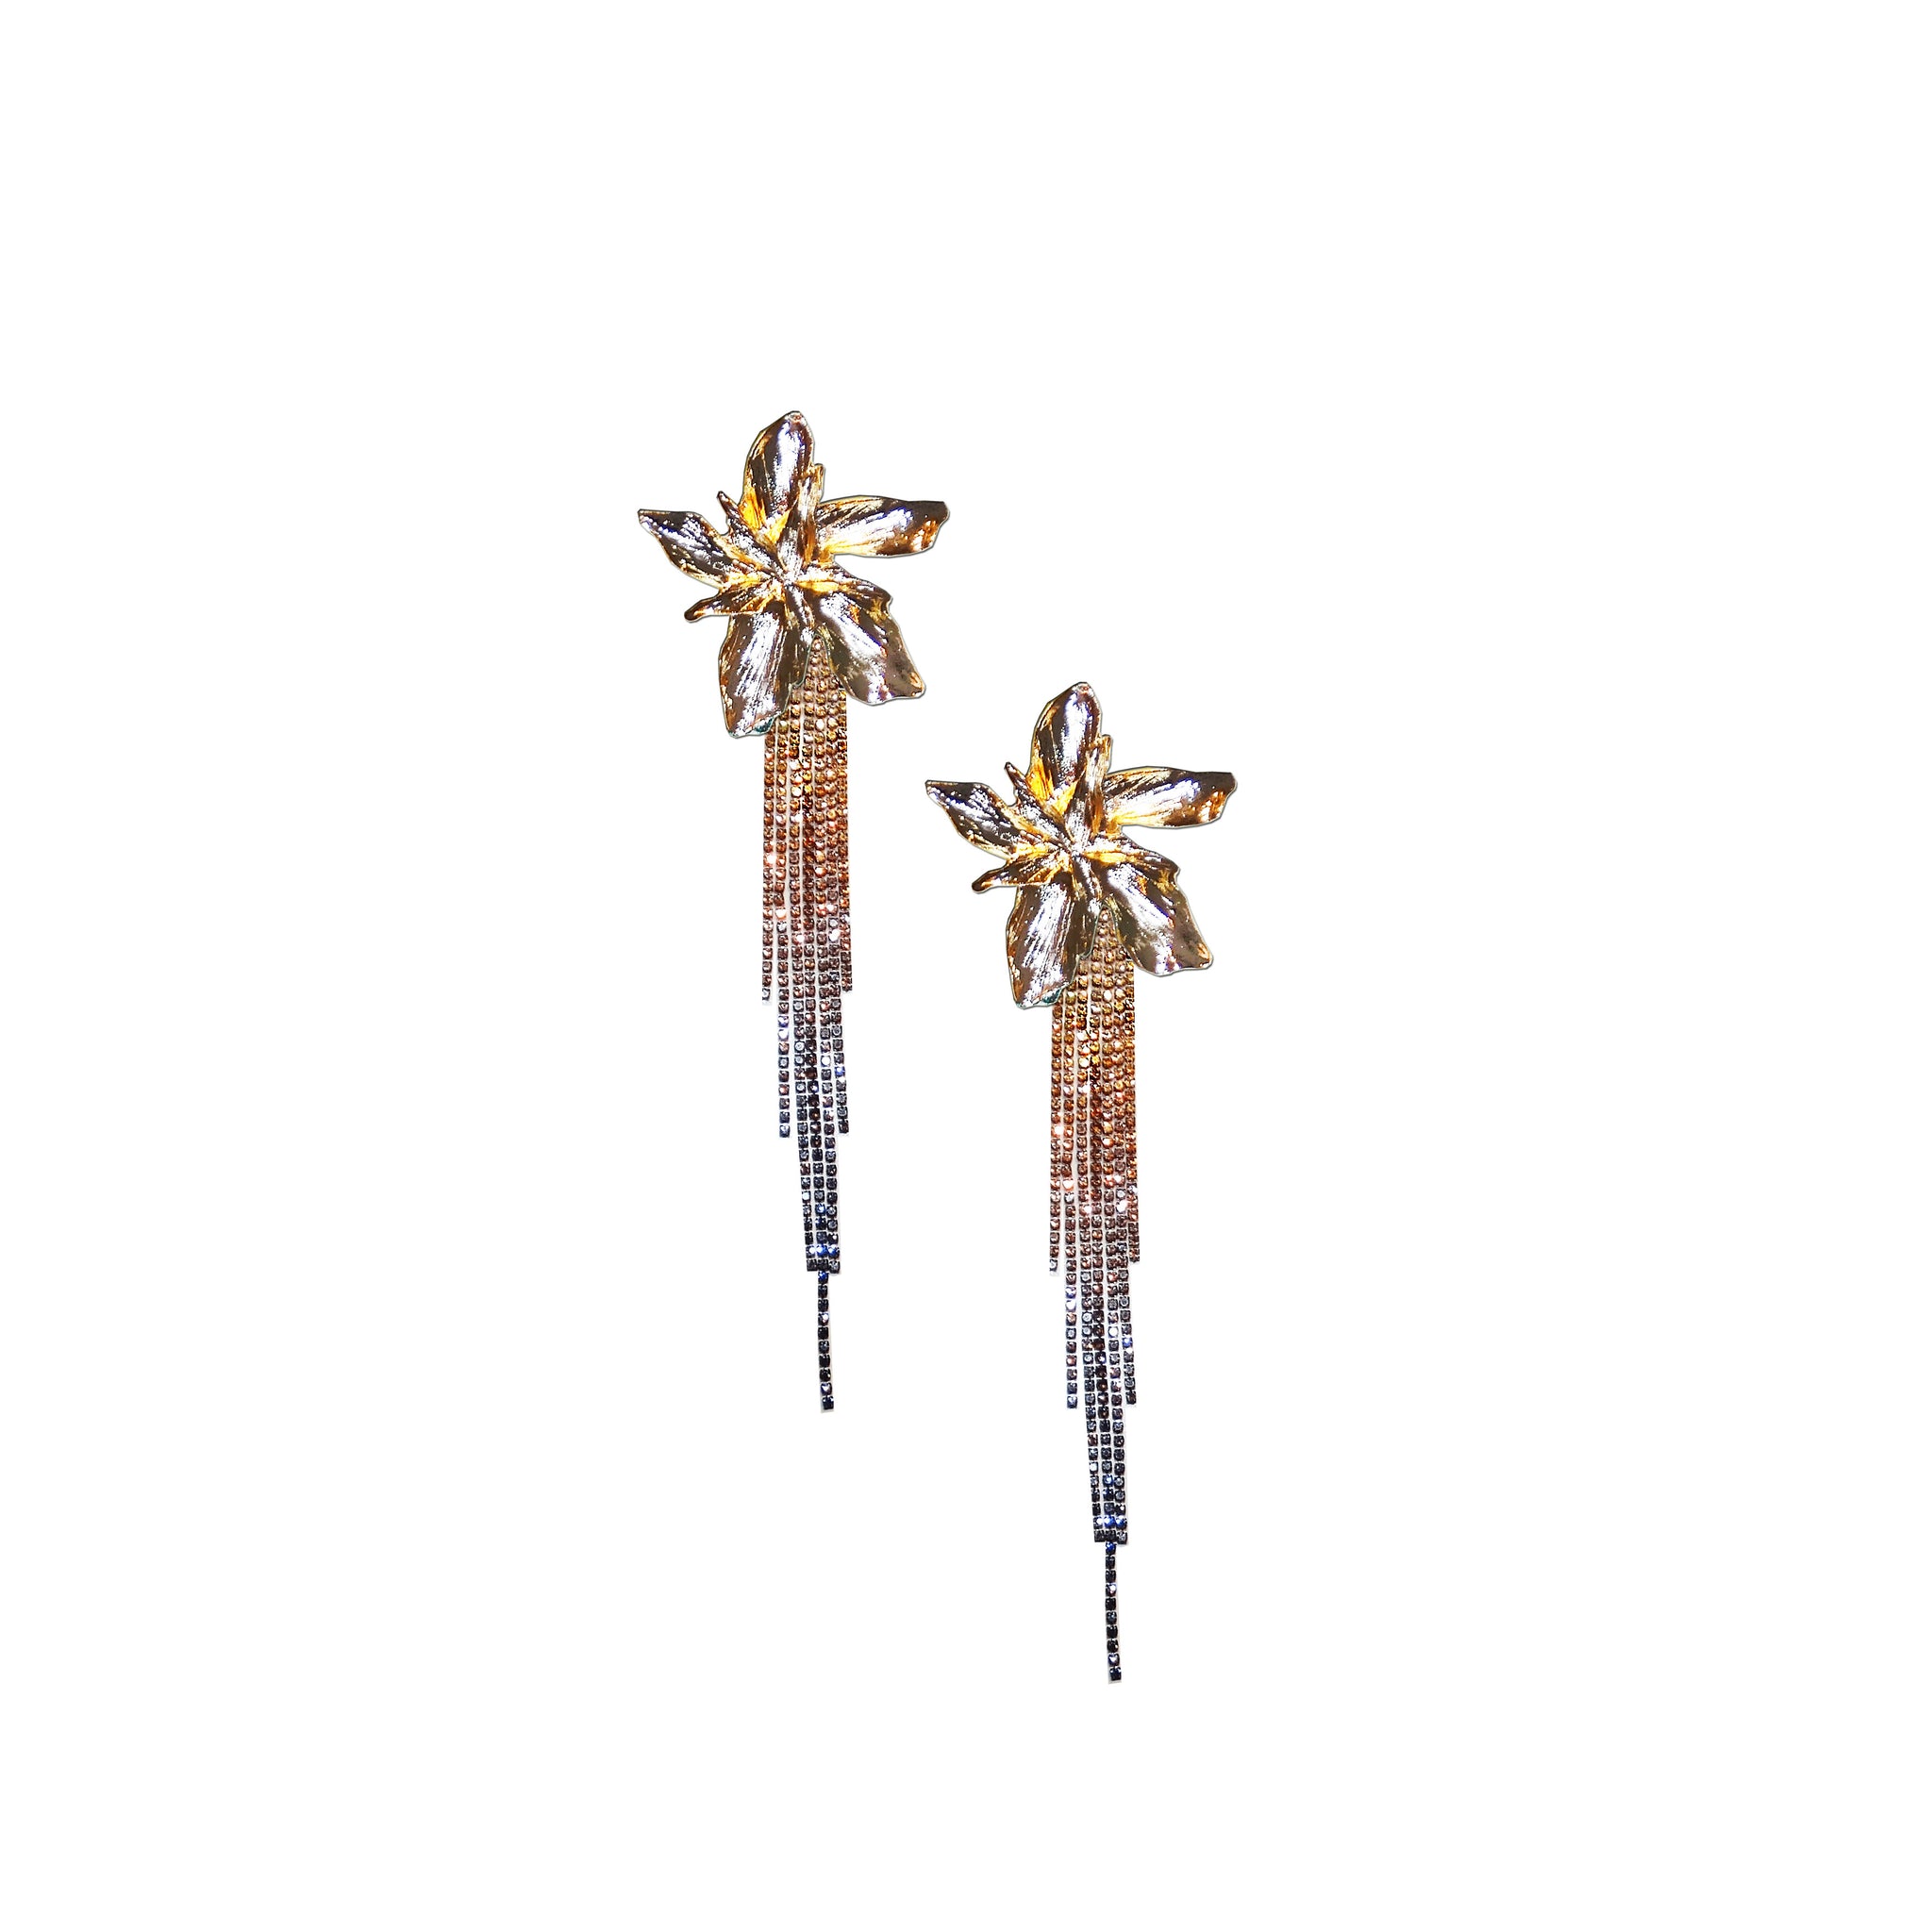 Exotica amber gold flower drop earrings